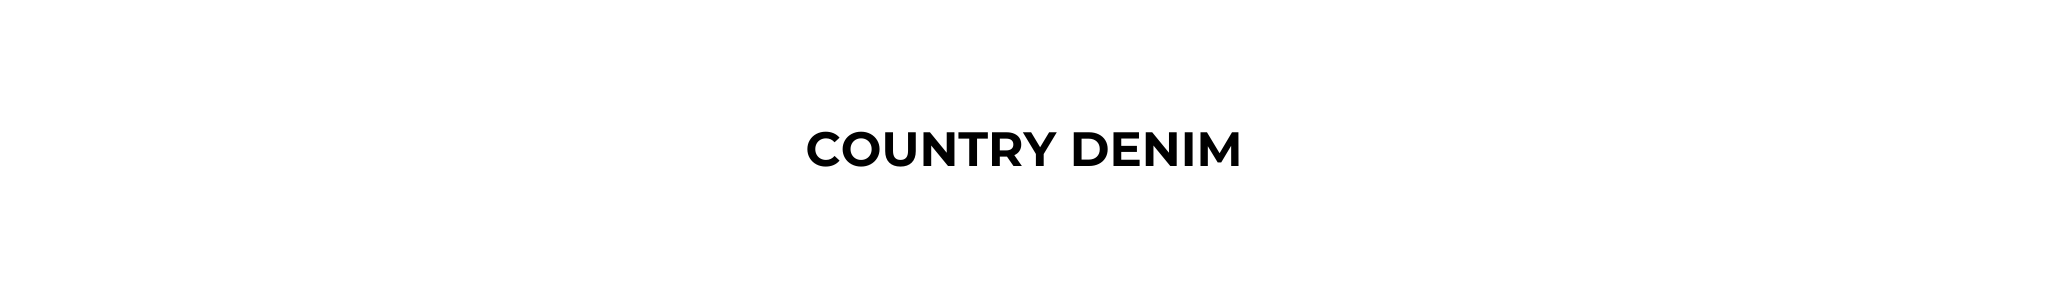 COUNTRY DENIM